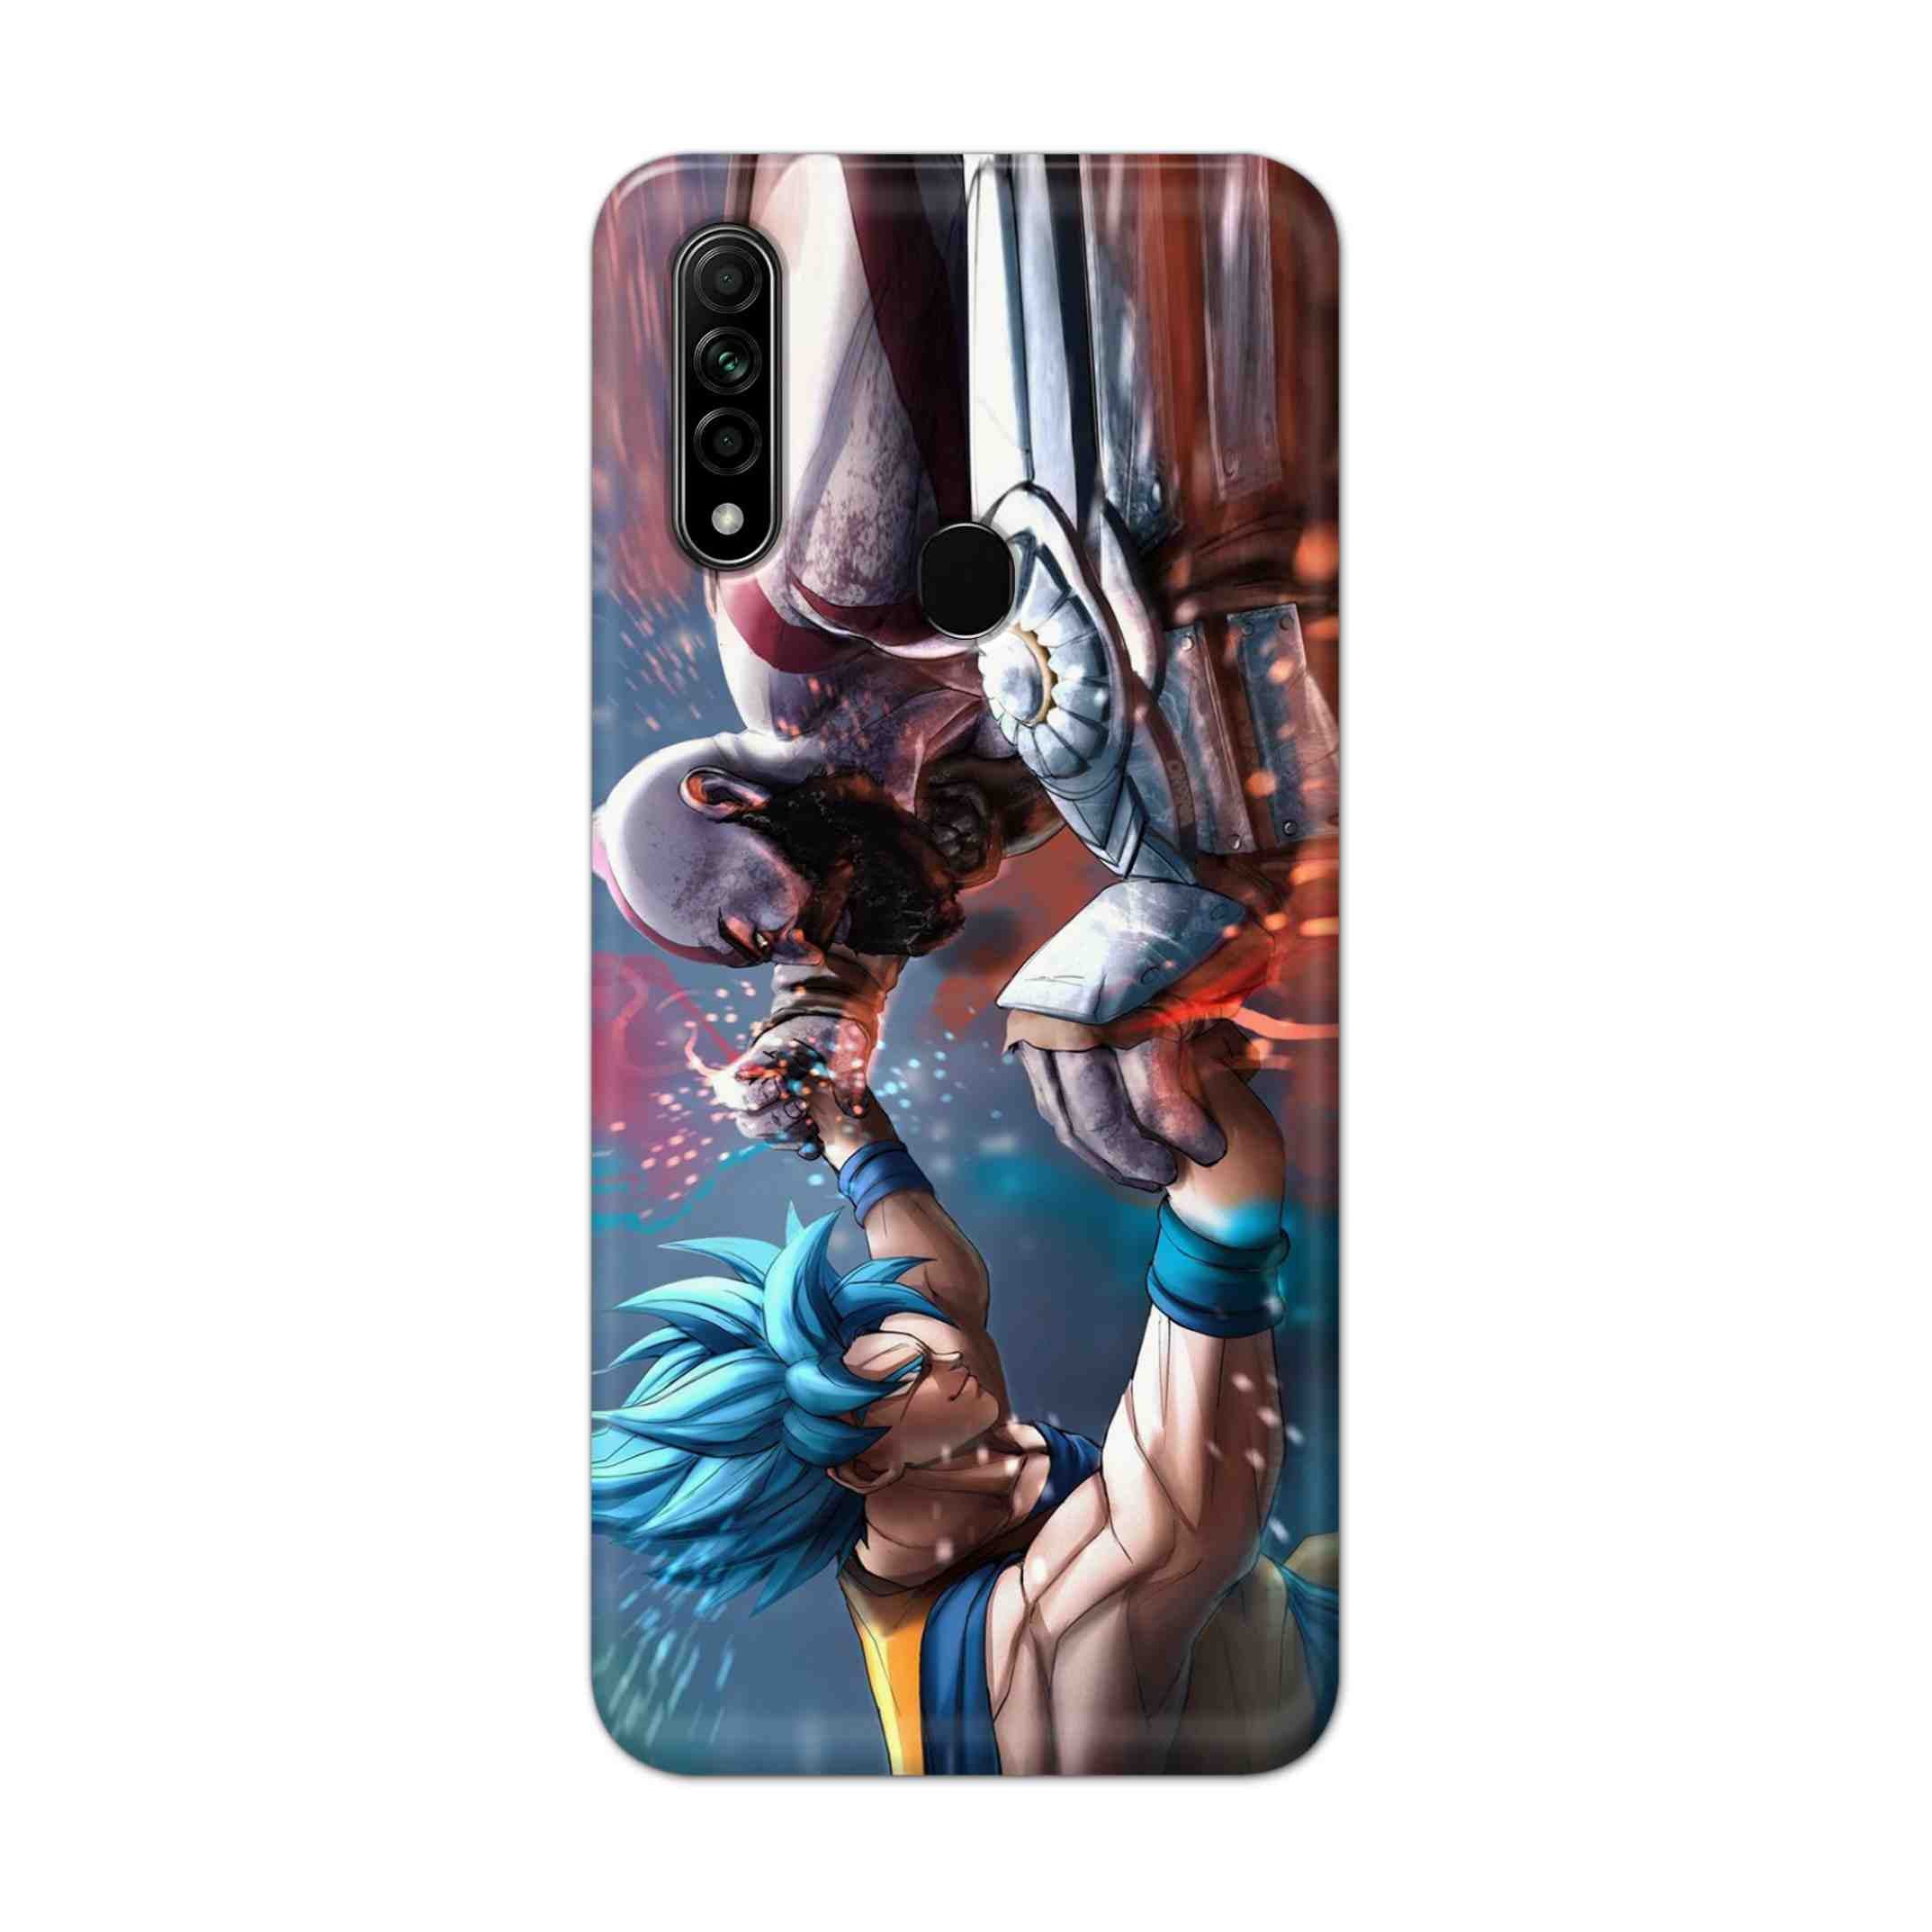 Buy Goku Vs Kratos Hard Back Mobile Phone Case Cover For Oppo A31 (2020) Online